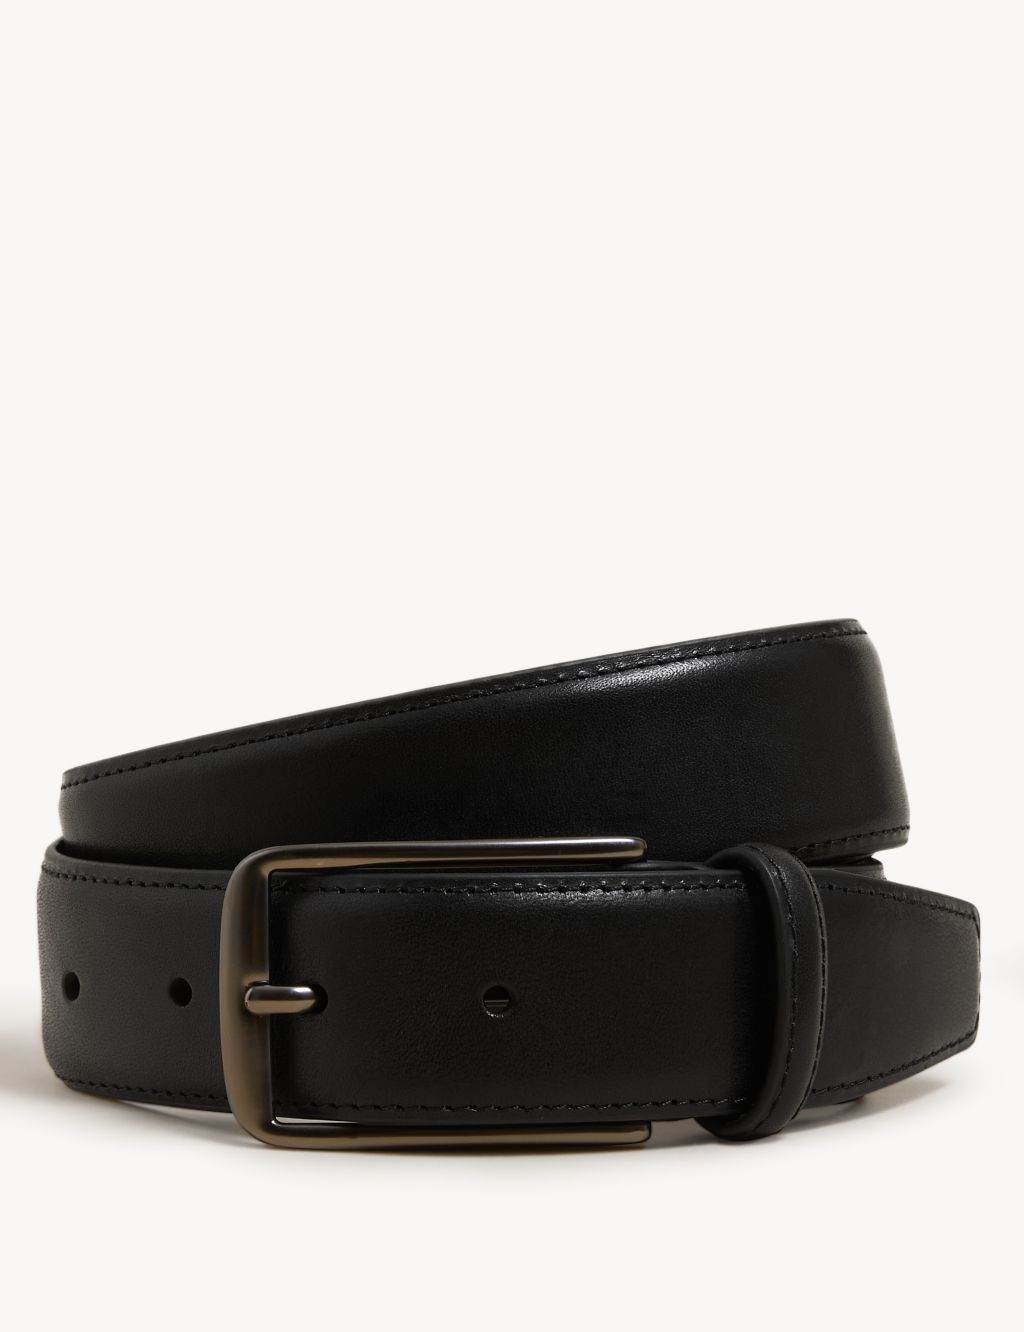 Italian Leather Smart Belt image 1